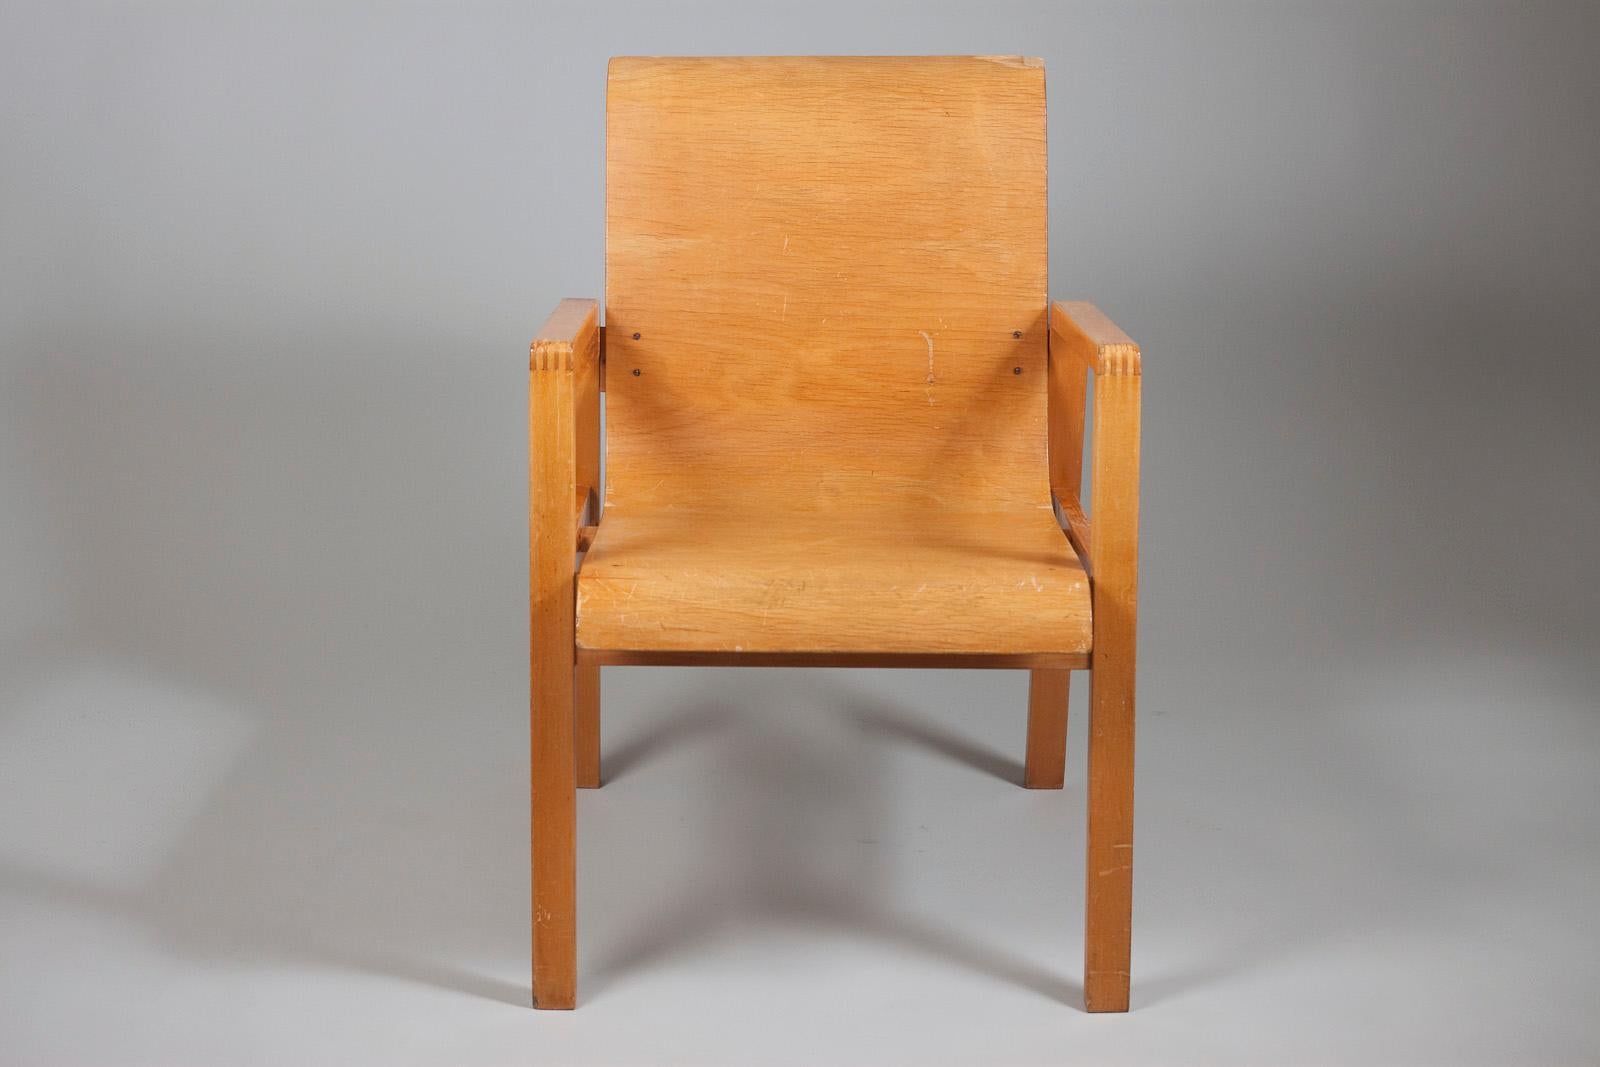 Alvar Aalto designed this chair in 1932 for the Paimio Sanatorium hospital for tuberculosis patients.